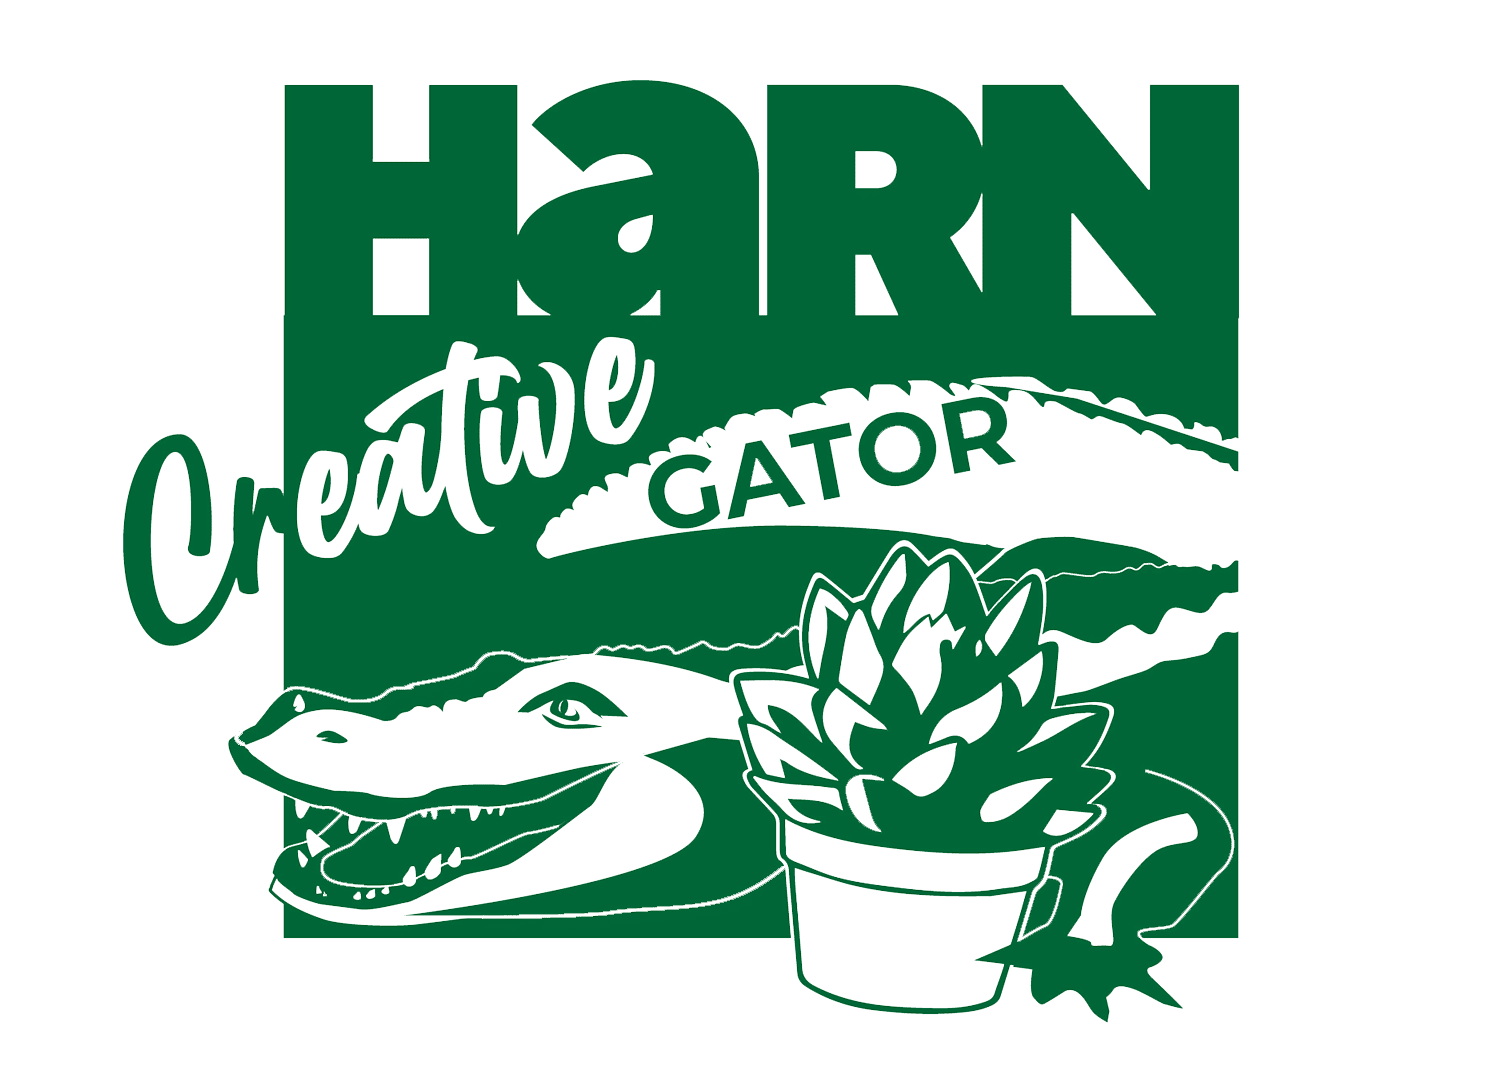 Creative Gator workshop logo